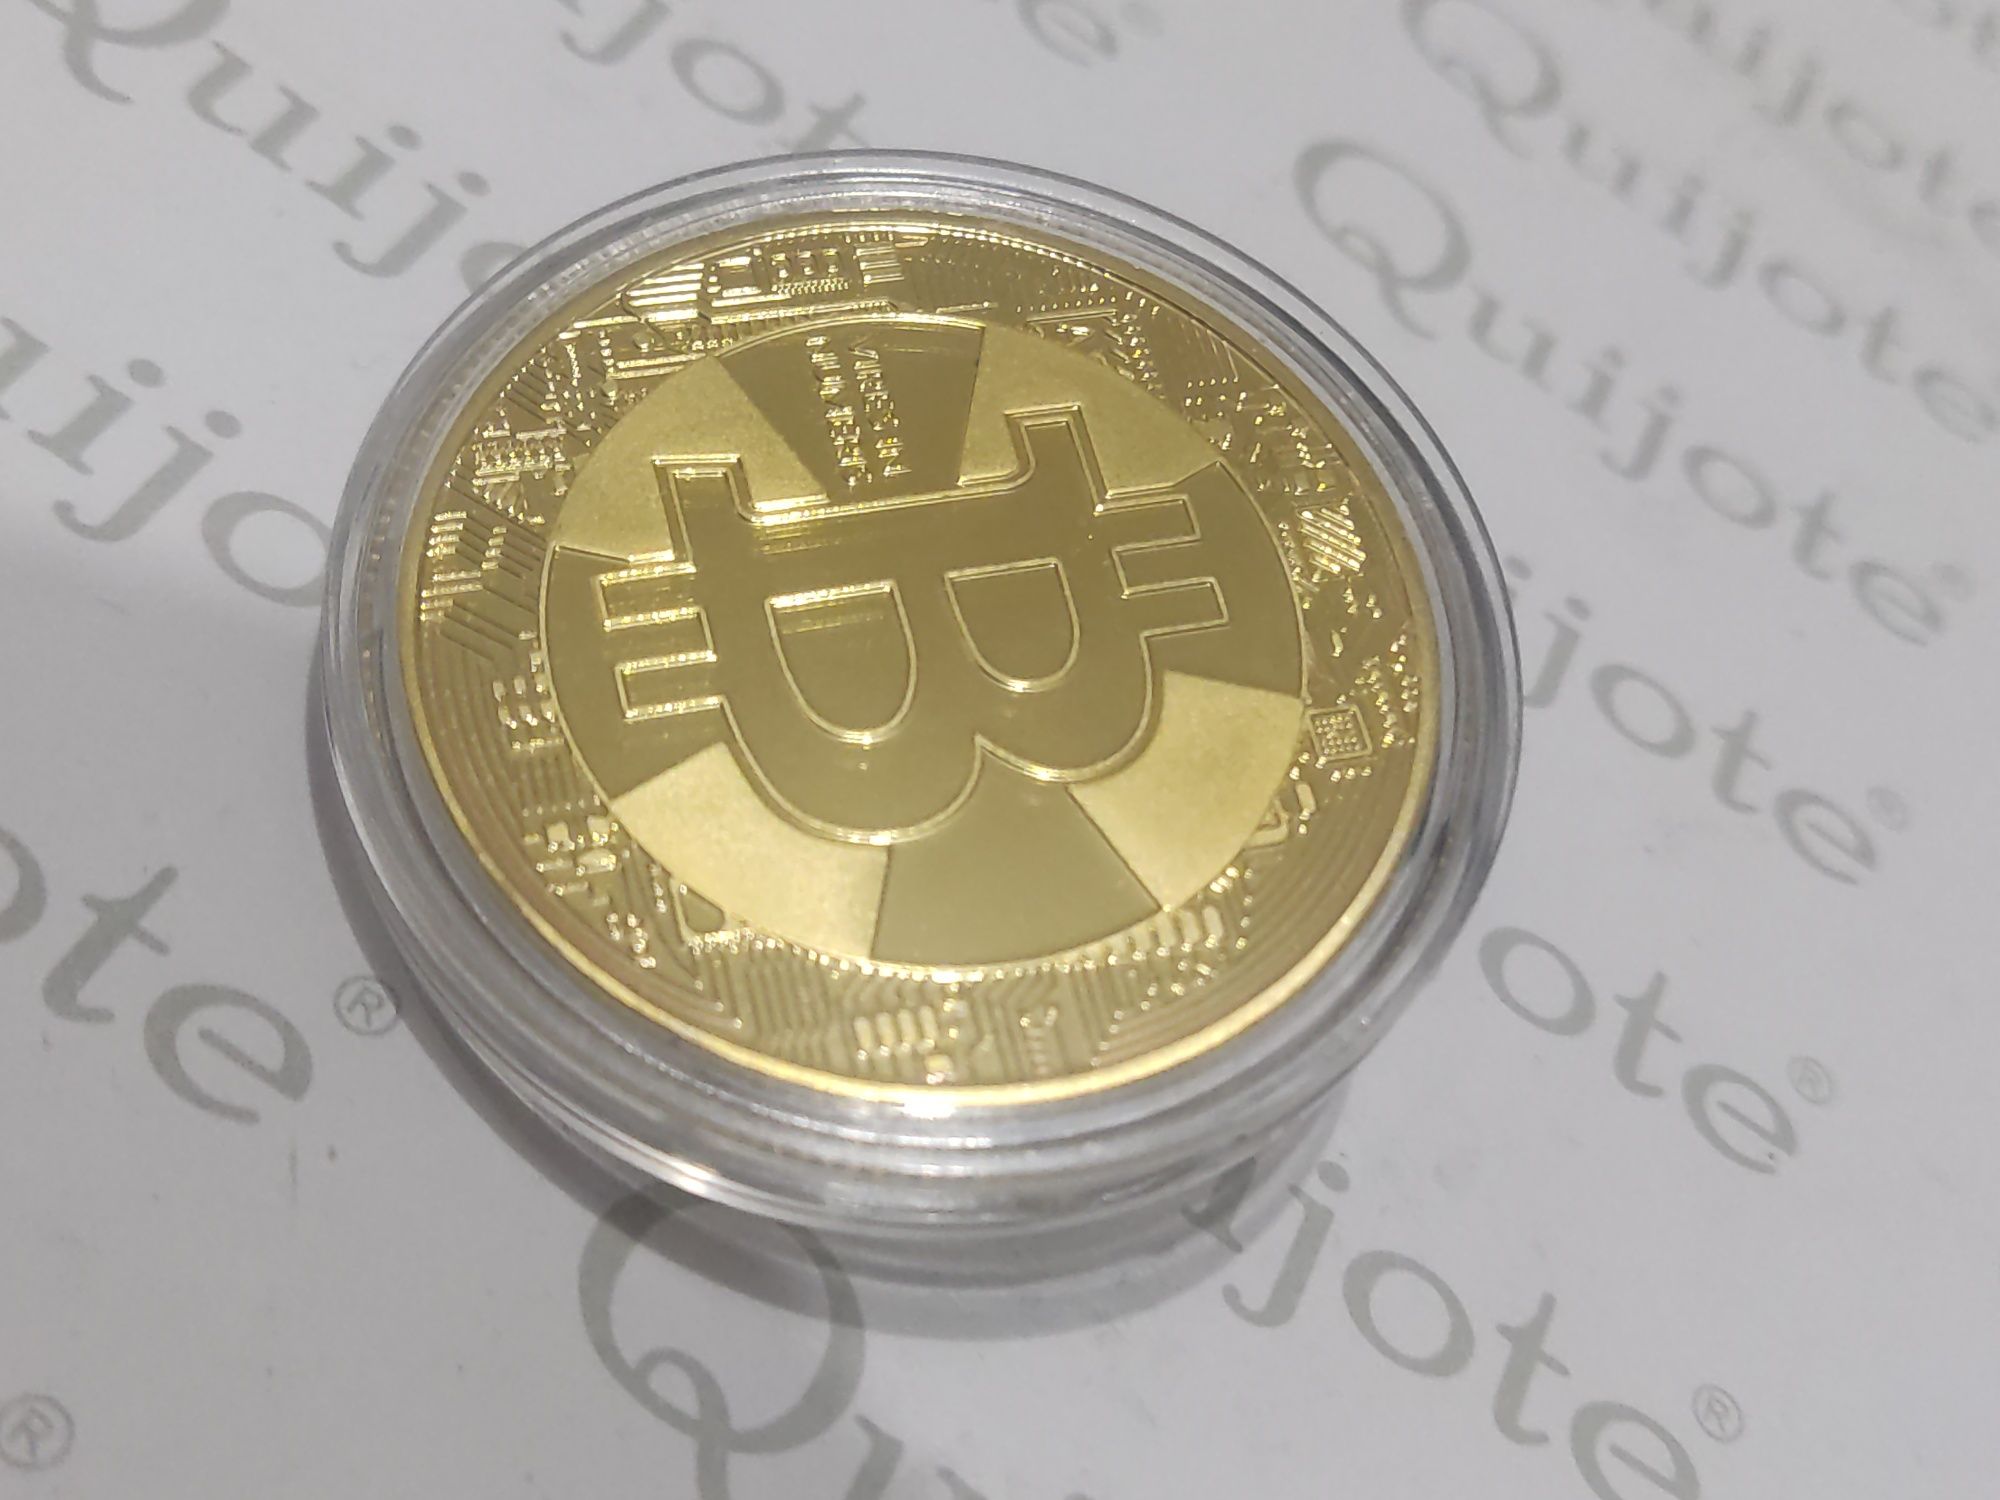 Bitcoin moneta kryptowaluta 2017 kolekcjonerska piękna